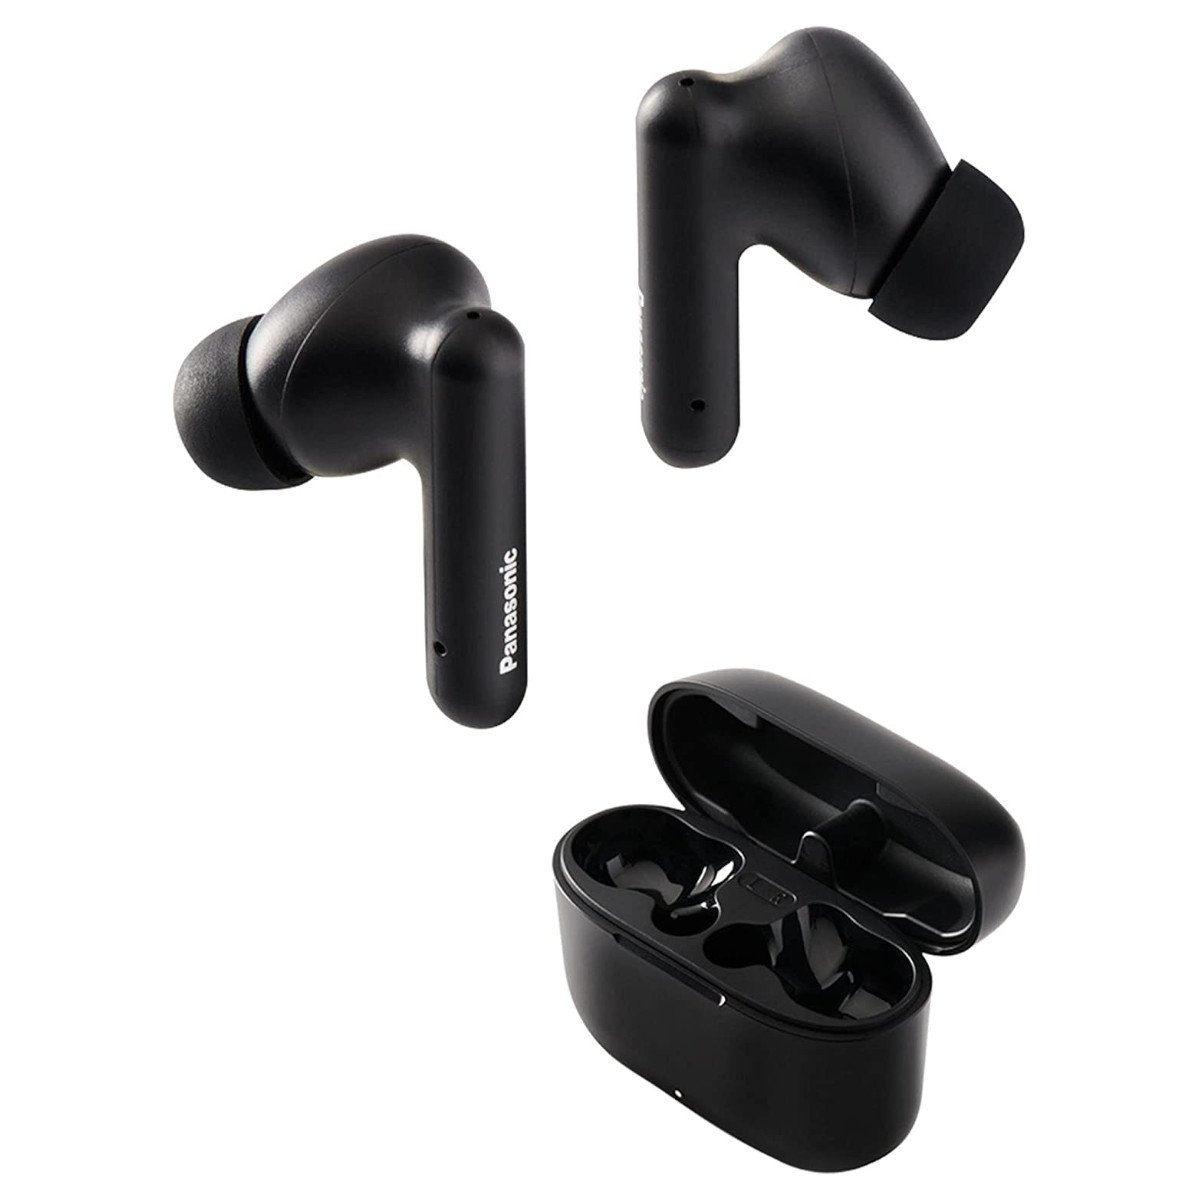 Auriculares Bluetooth True Wireless Para Iphone 11 Pro Xiaomi A6 5.0  Auriculares deportivos internos Micrófono incorporado Negro